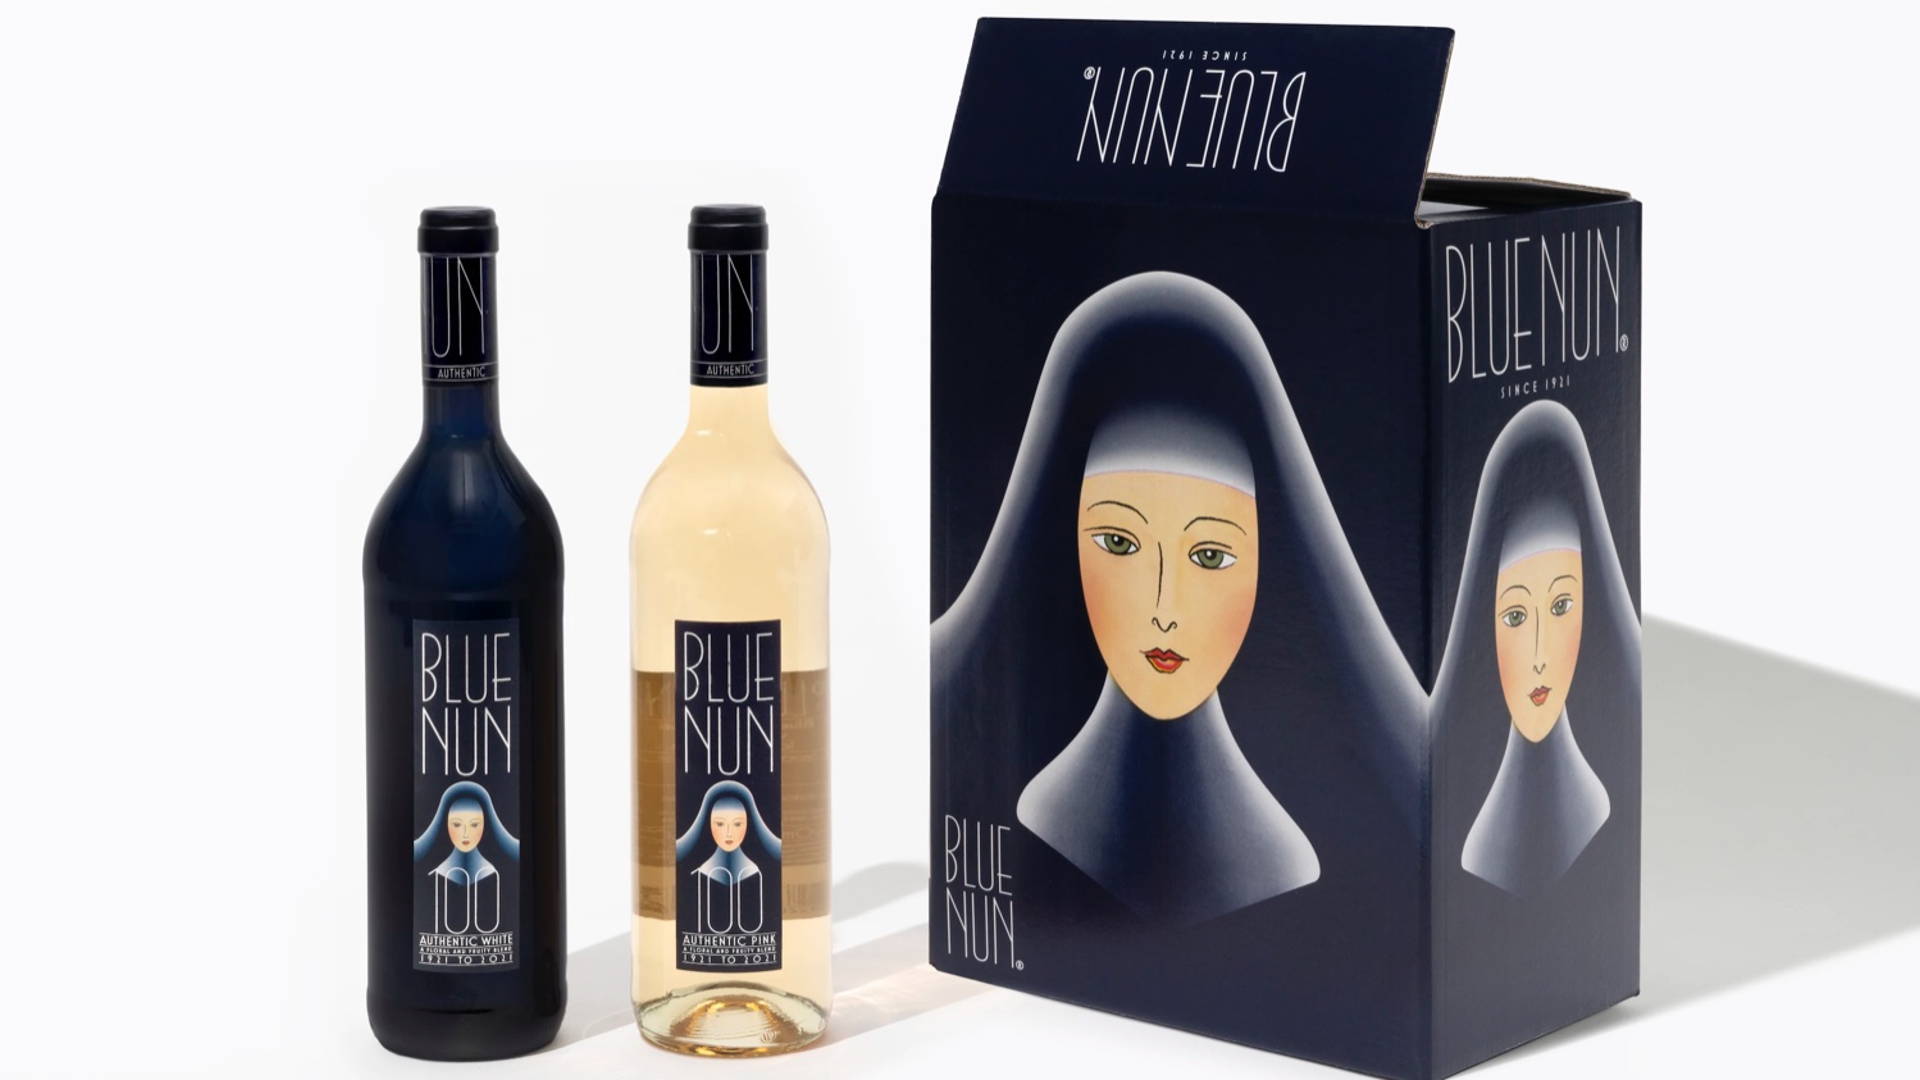 Featured image for Pentagram Partner Paula Scher Designs New Packaging For German Wine Brand Blue Nun